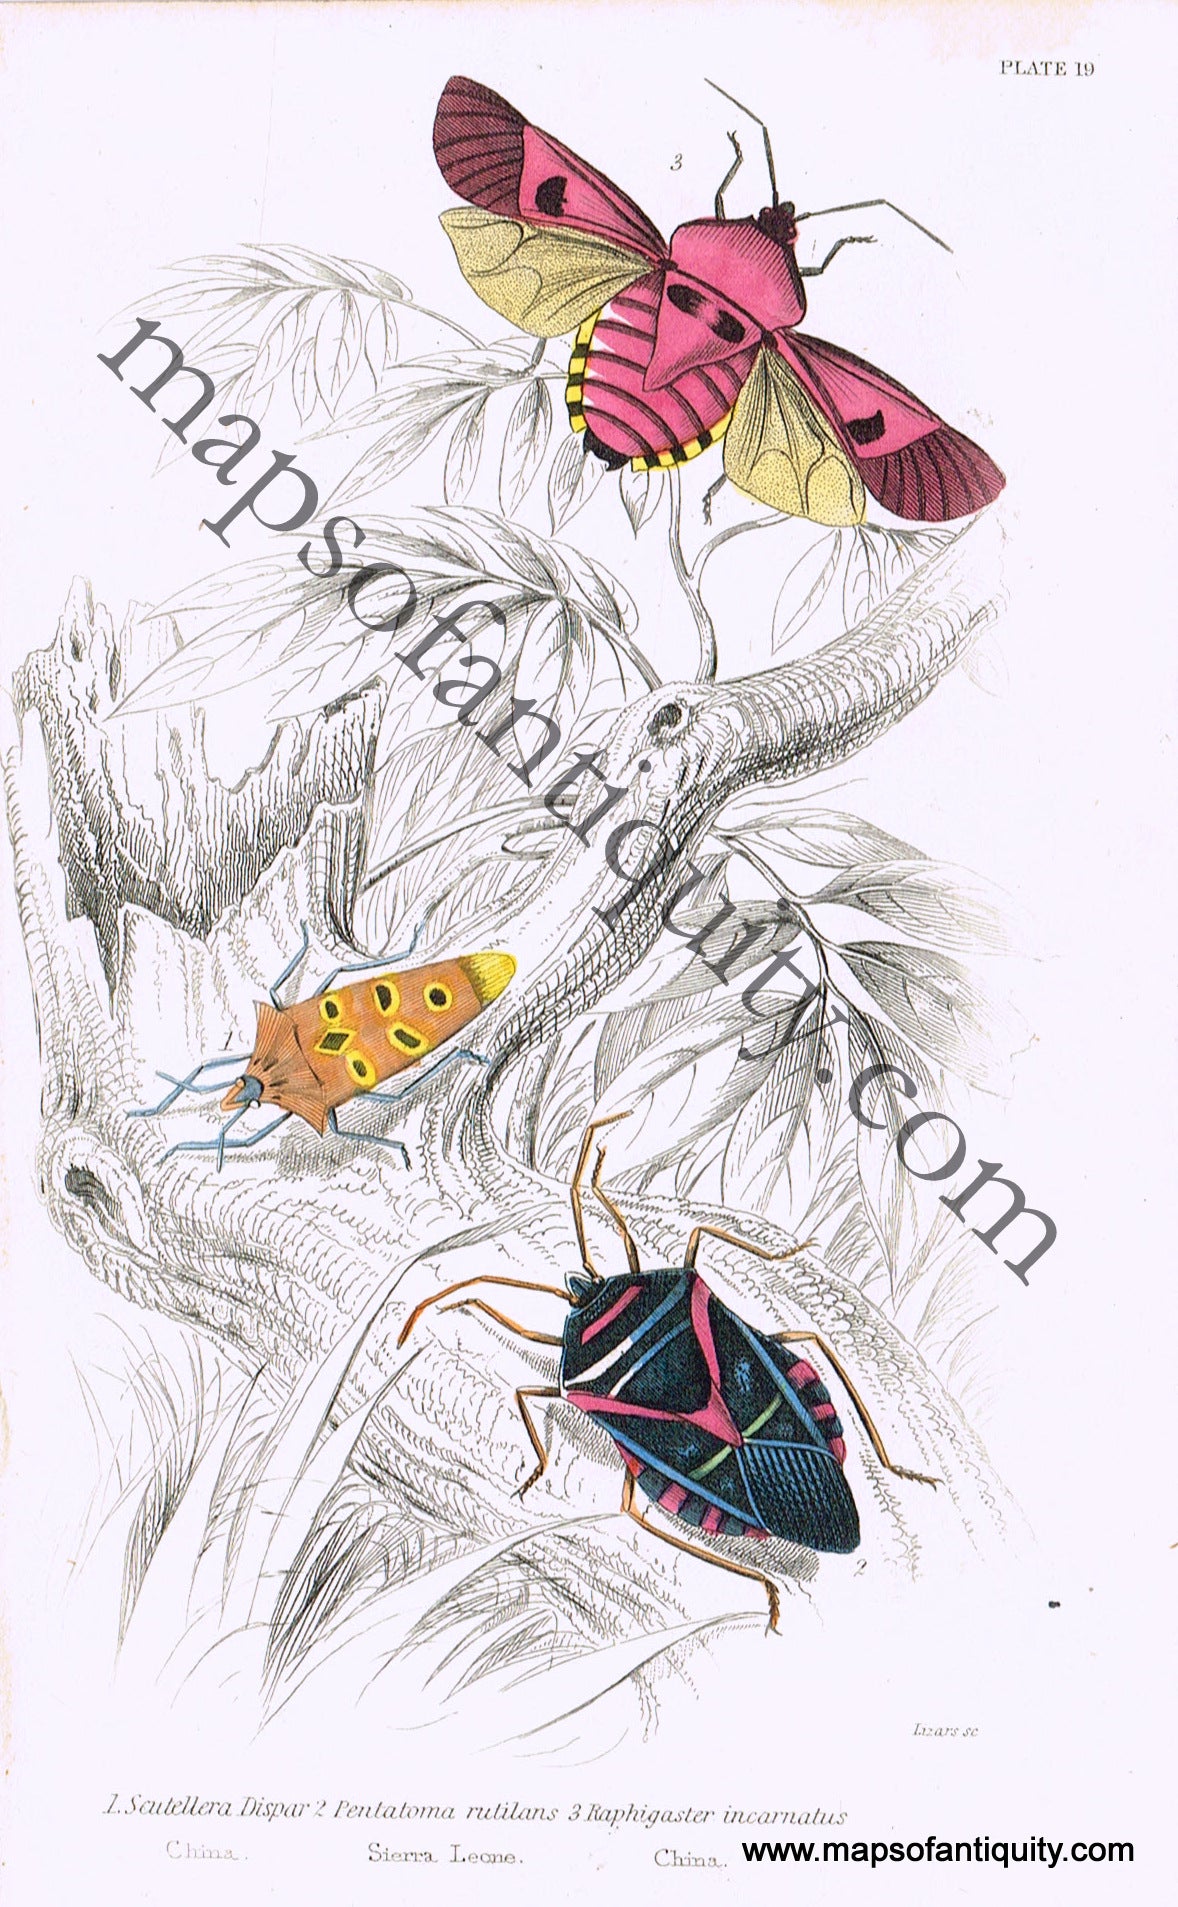 Antique-Hand-Colored-Print-Scutellera-dispar-Pentatoma-rutilans-and-Raphigaster-incarnatus-Antique-Prints-Natural-History-Insects-1840-Duncan-Maps-Of-Antiquity